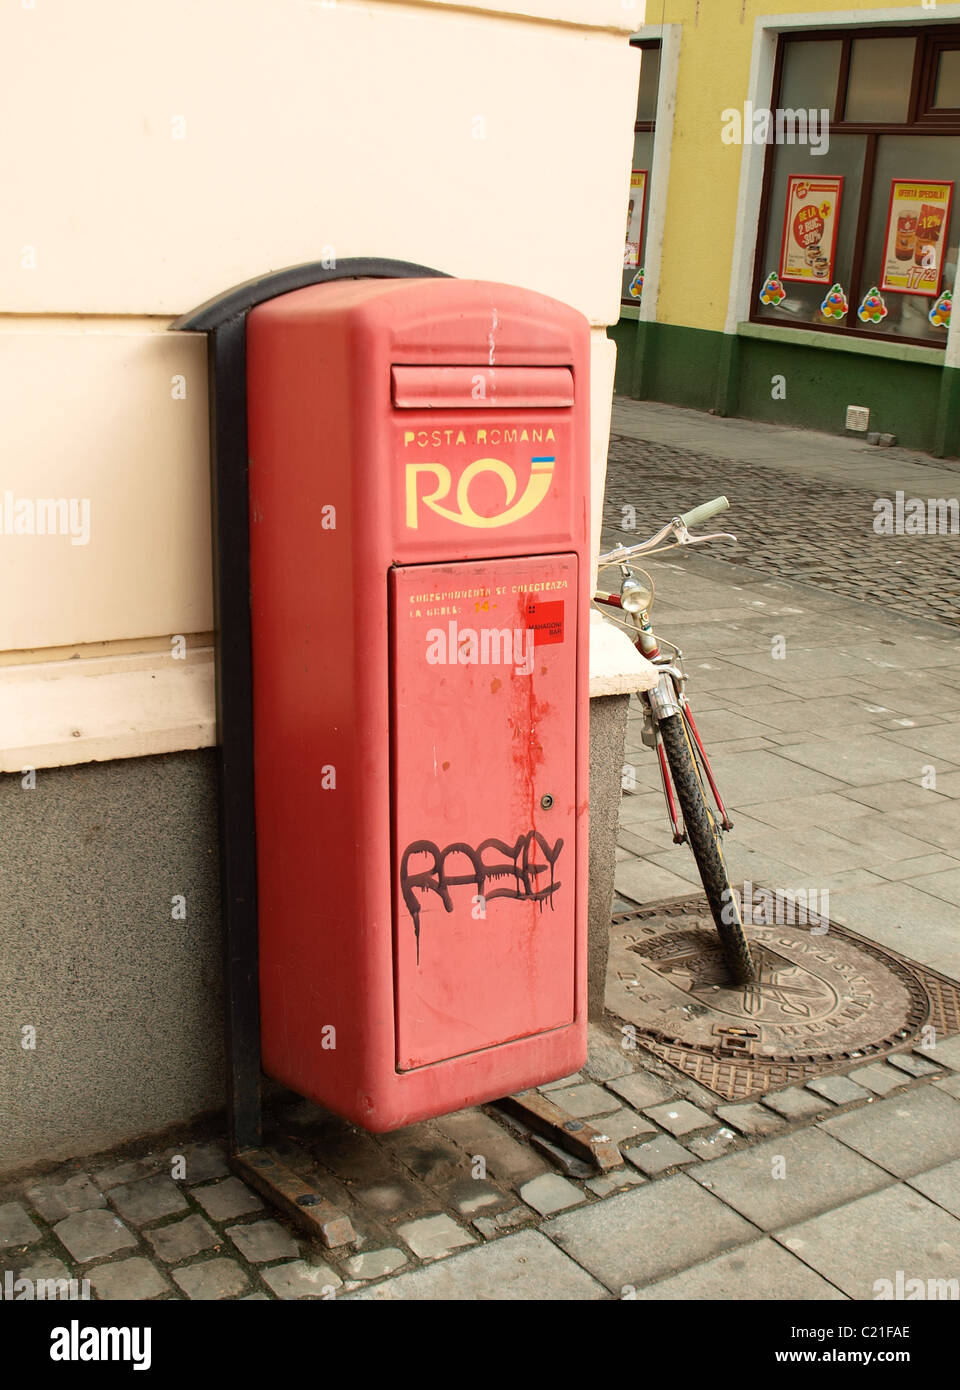 Romanian post box Stock Photo - Alamy